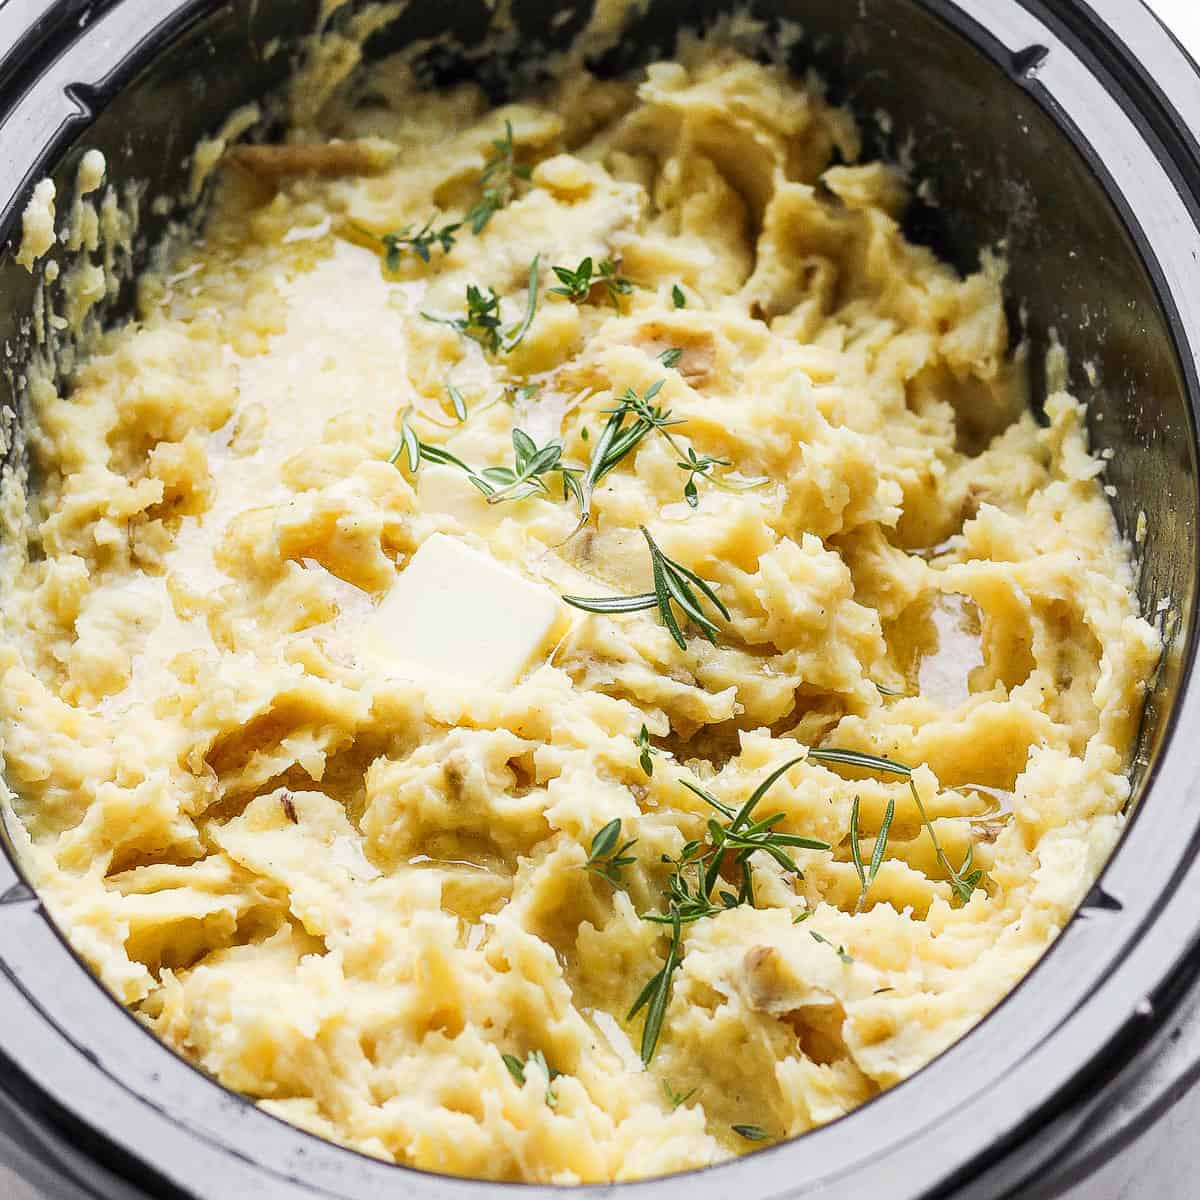 Crockpot Mashed Potatoes Recipe – Match Foodie Finds